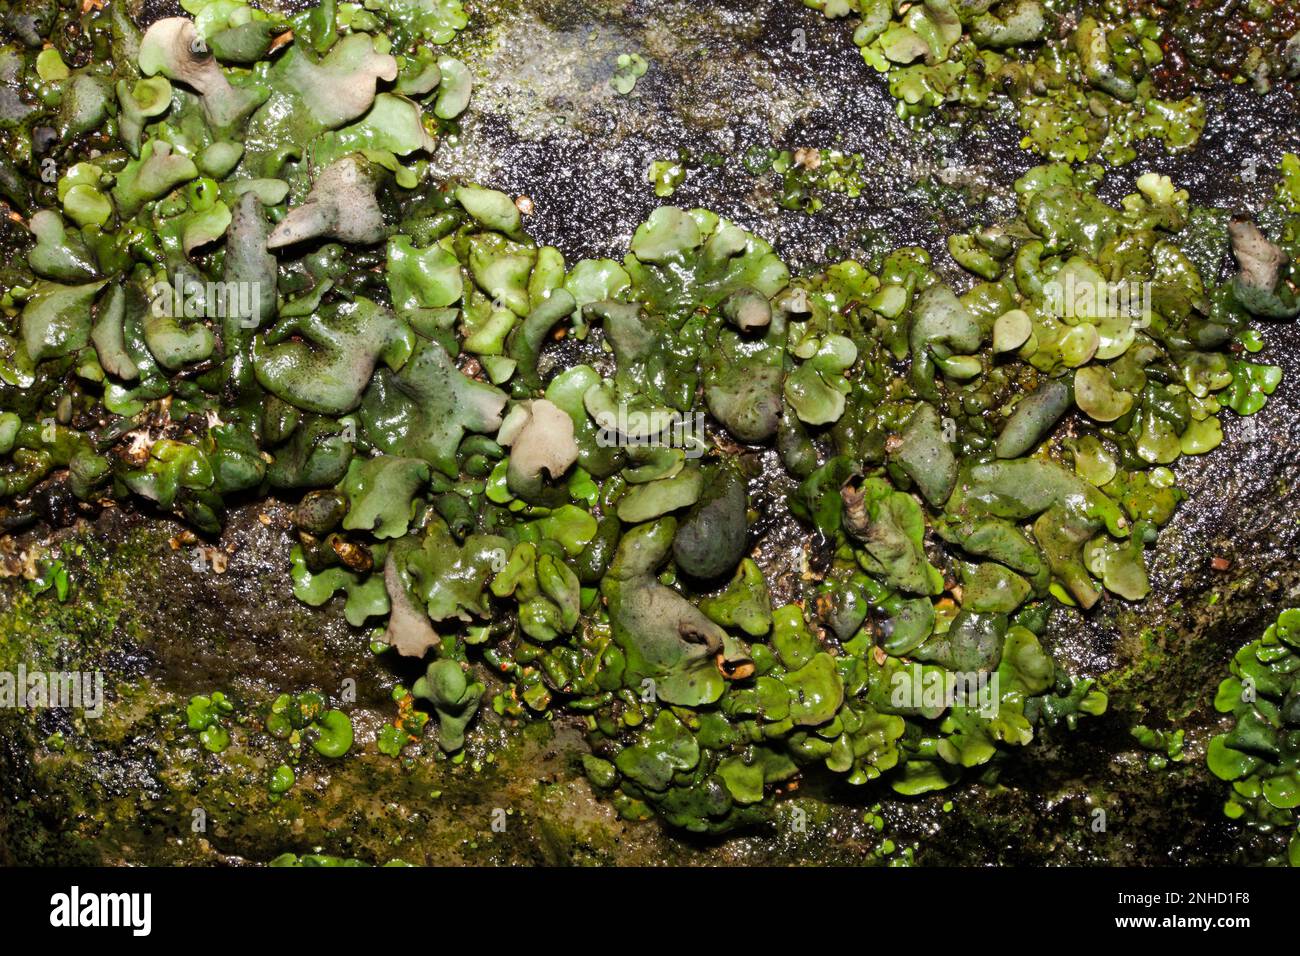 The lichen Dermatocarpon luridum grows on wet rocks often by rocky rivers where it maybe submerged. Stock Photo